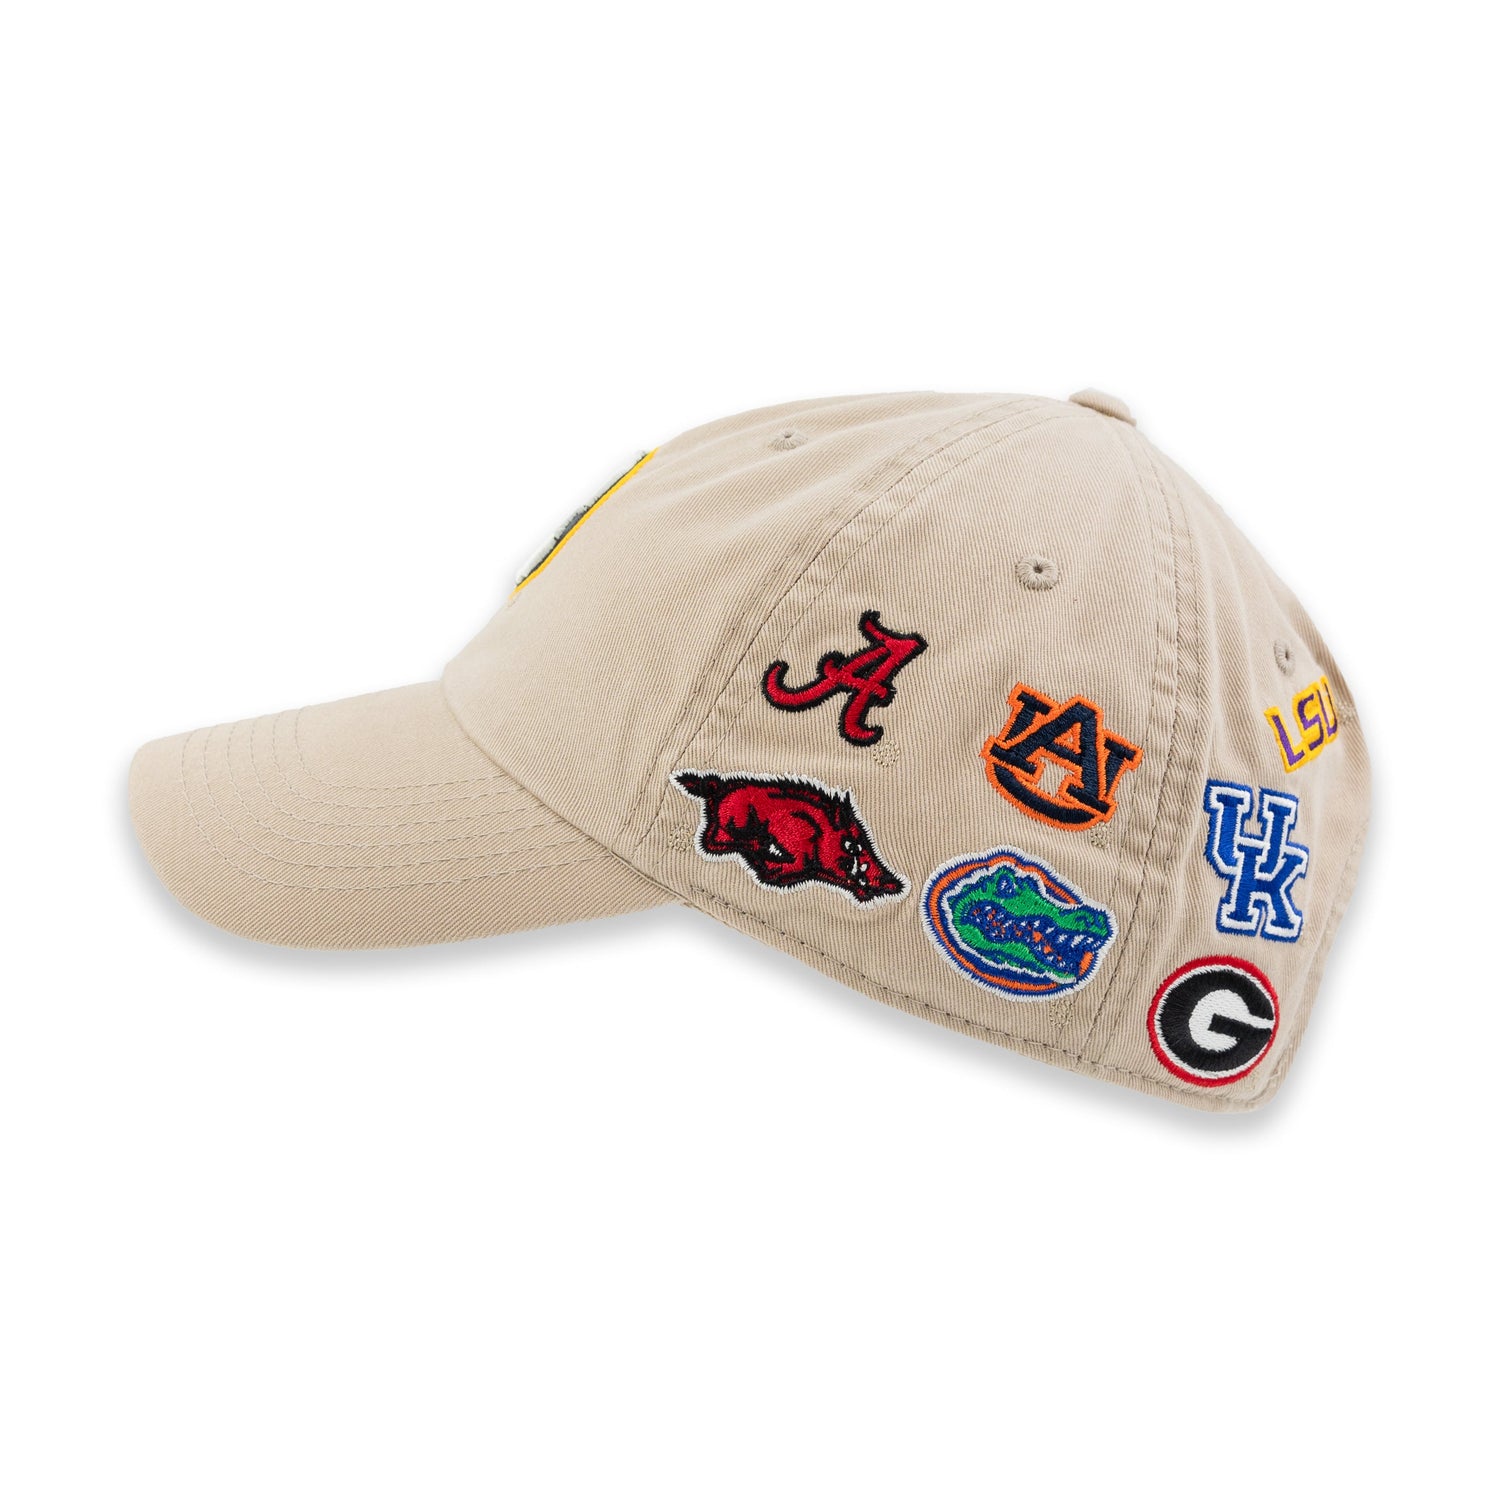 SEC Conference Hat